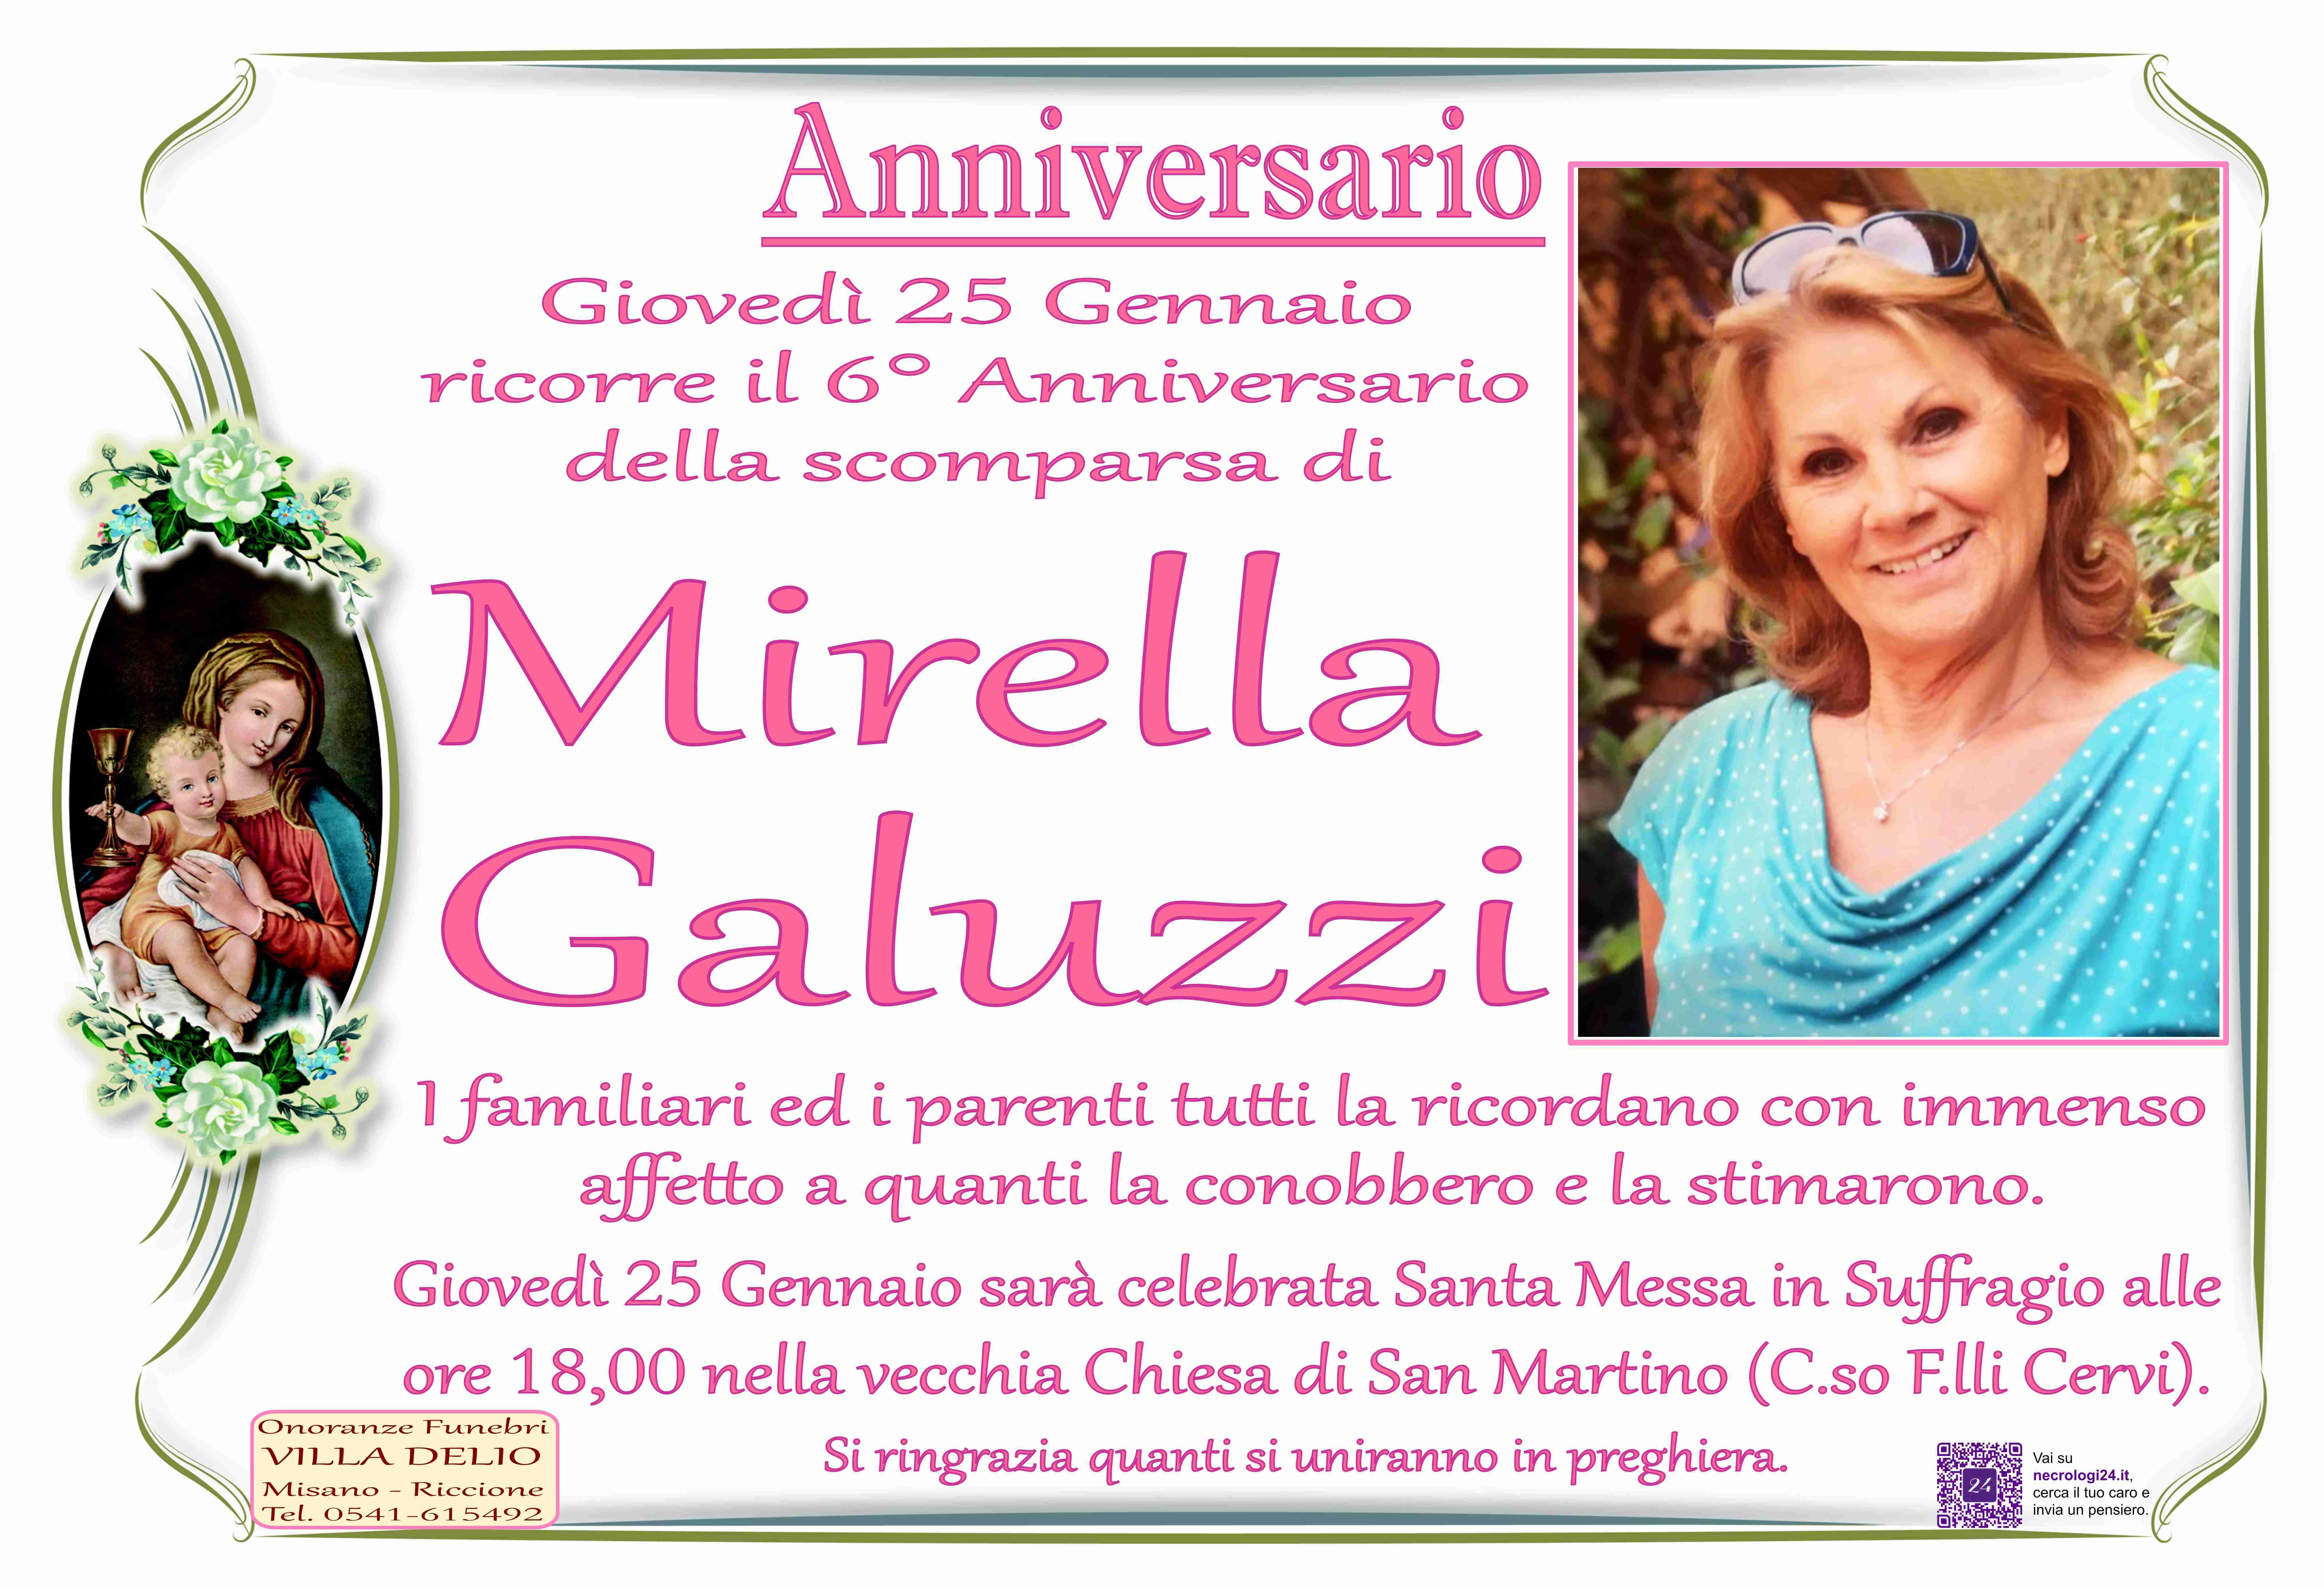 Mirella Galuzzi